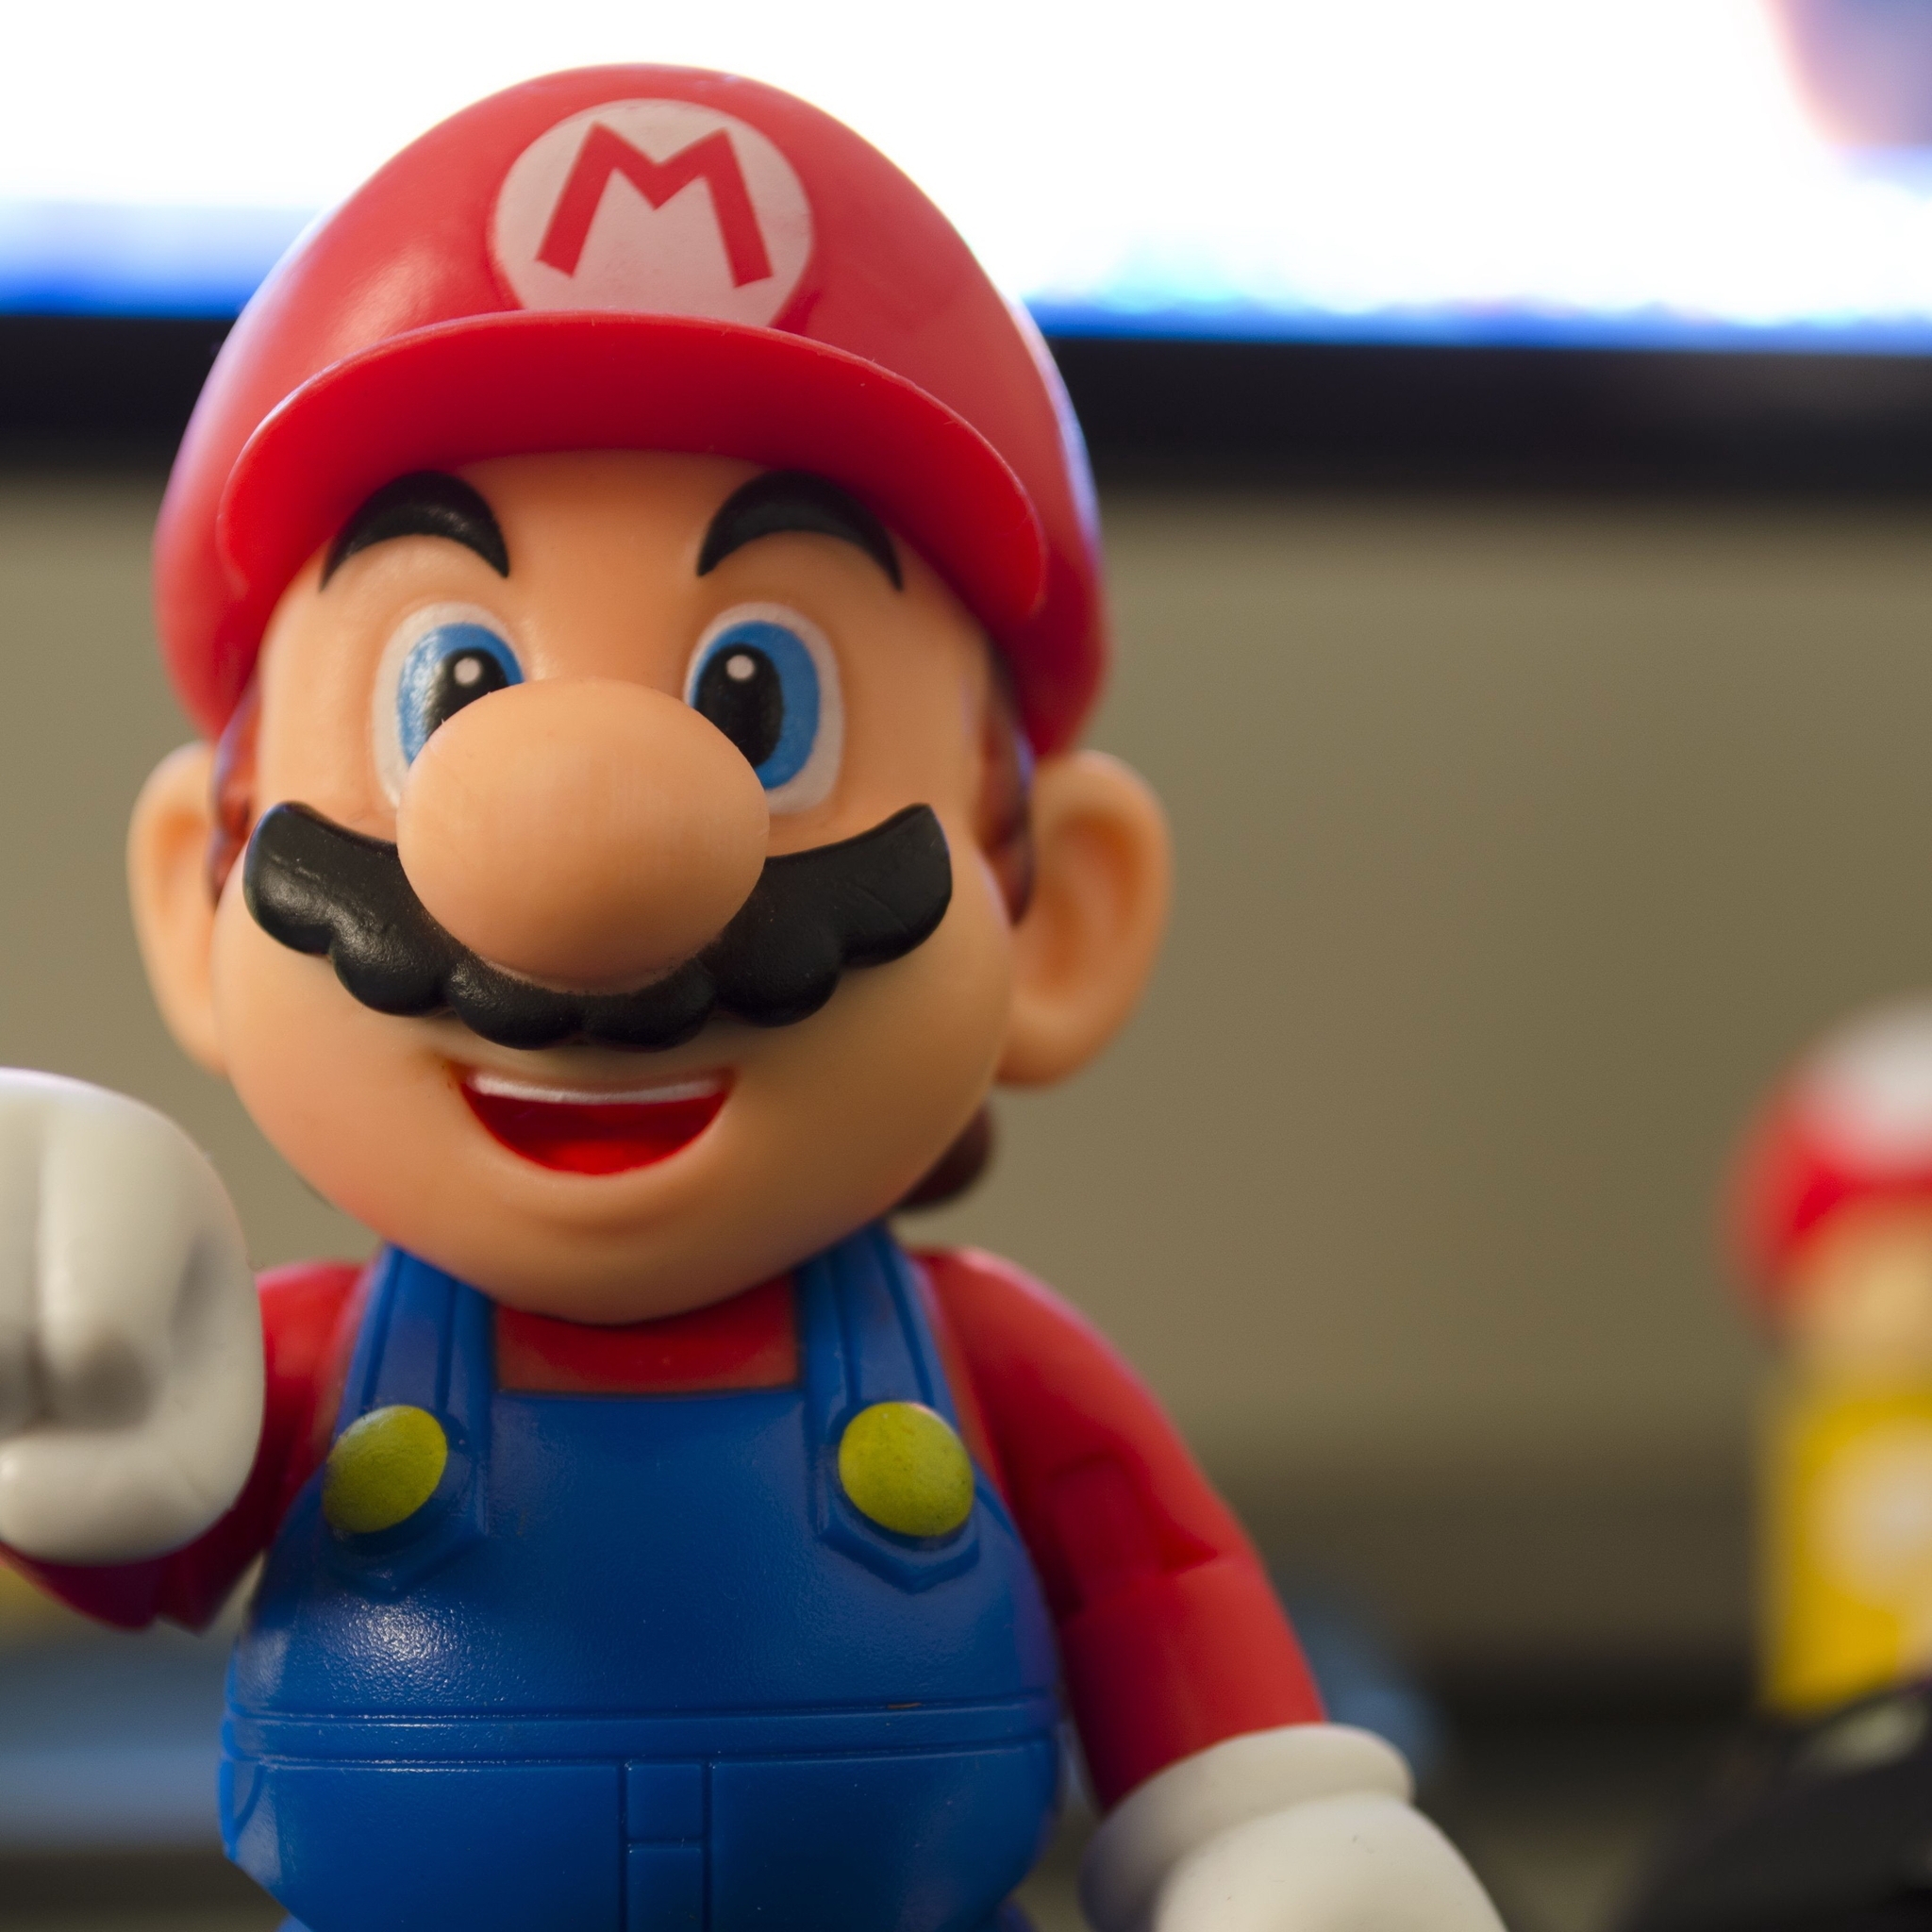 Super Mario Figurine for 2048 x 2048 New iPad resolution